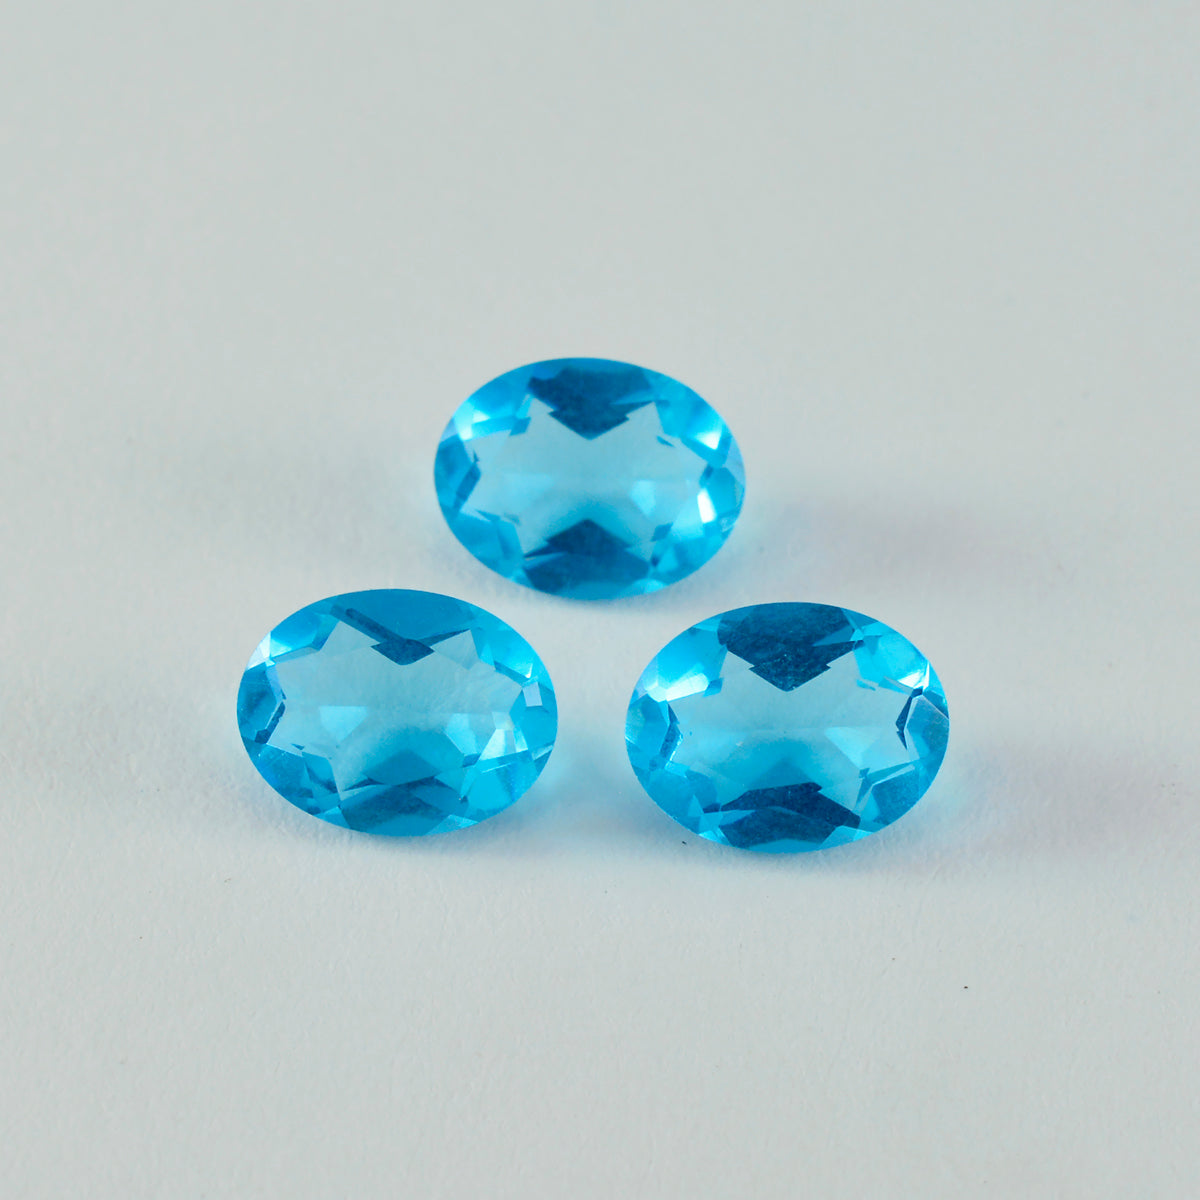 Riyogems 1PC Blue Topaz CZ Faceted 10x12 mm Oval Shape handsome Quality Loose Stone